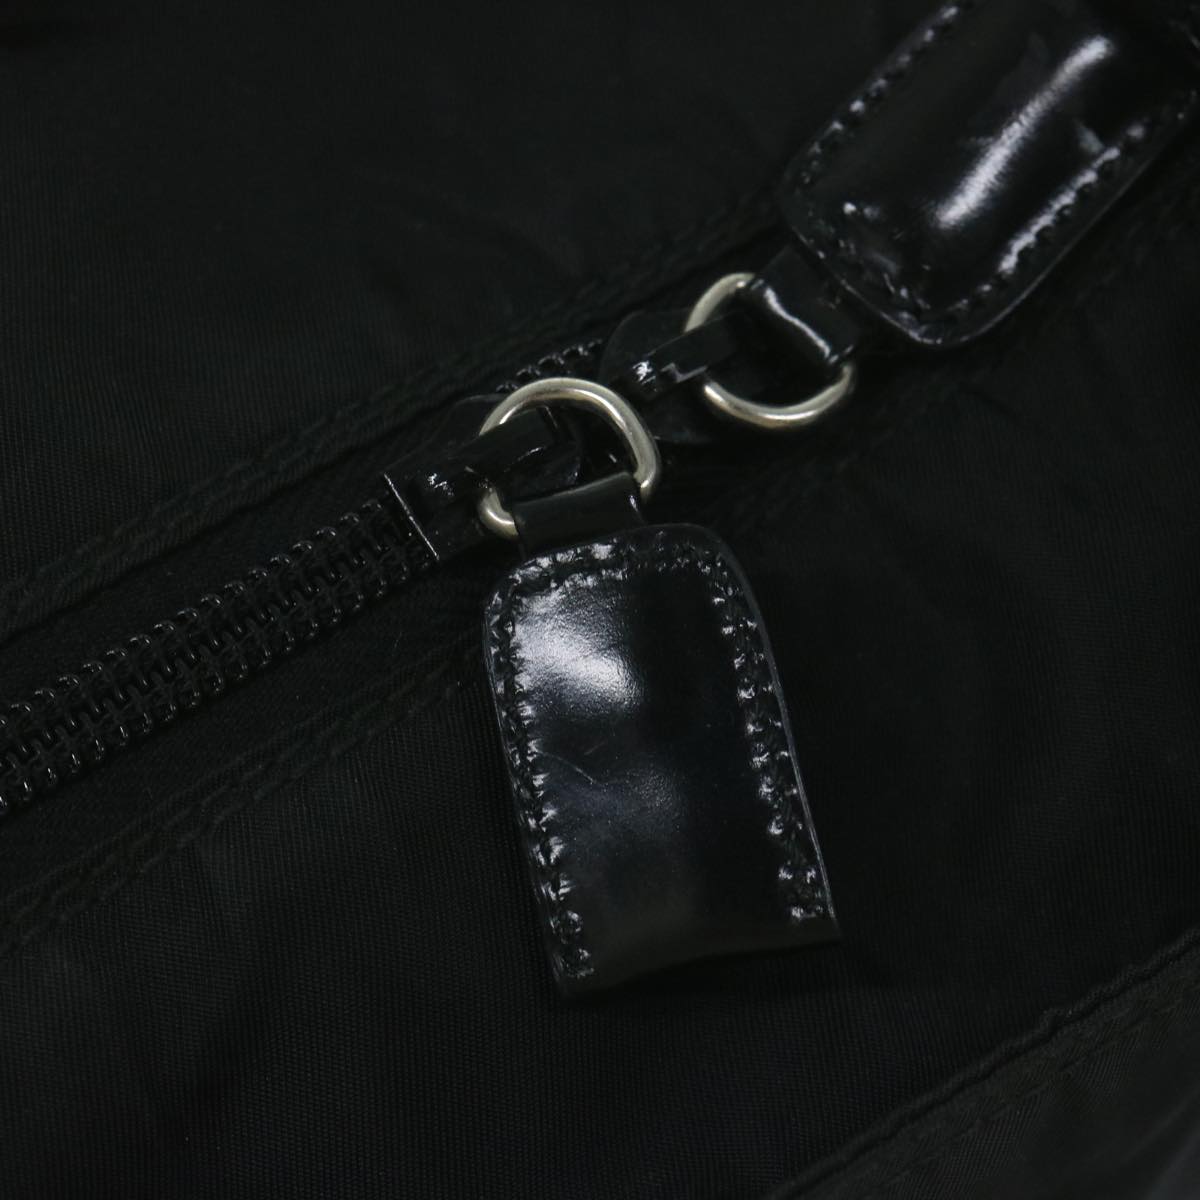 PRADA Tote Bag Nylon Black Auth 62783